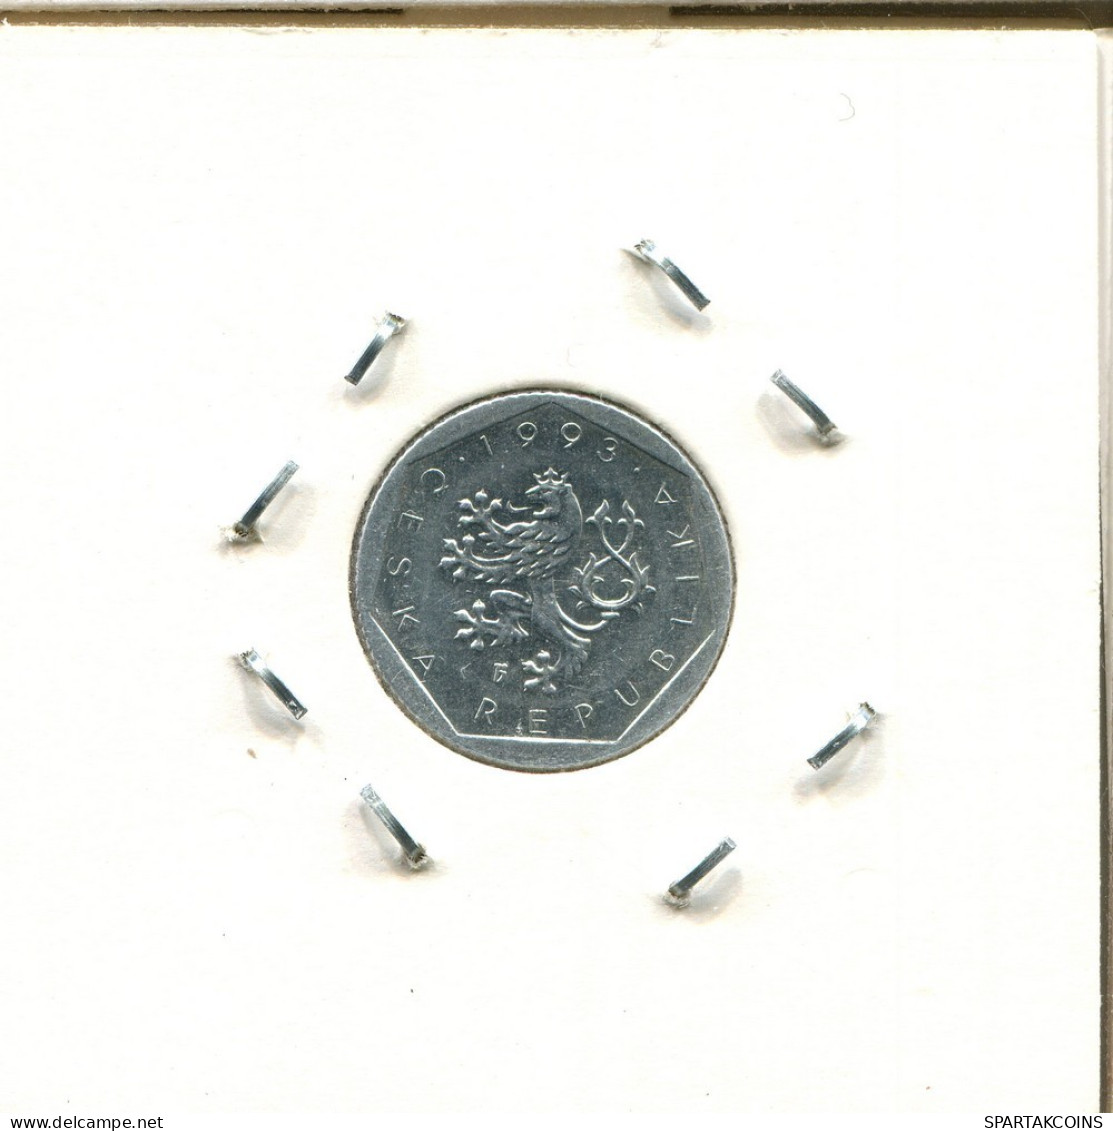 20 HALERU 1993 CZECHOSLOVAKIA Coin #AS549.U.A - Tsjechoslowakije